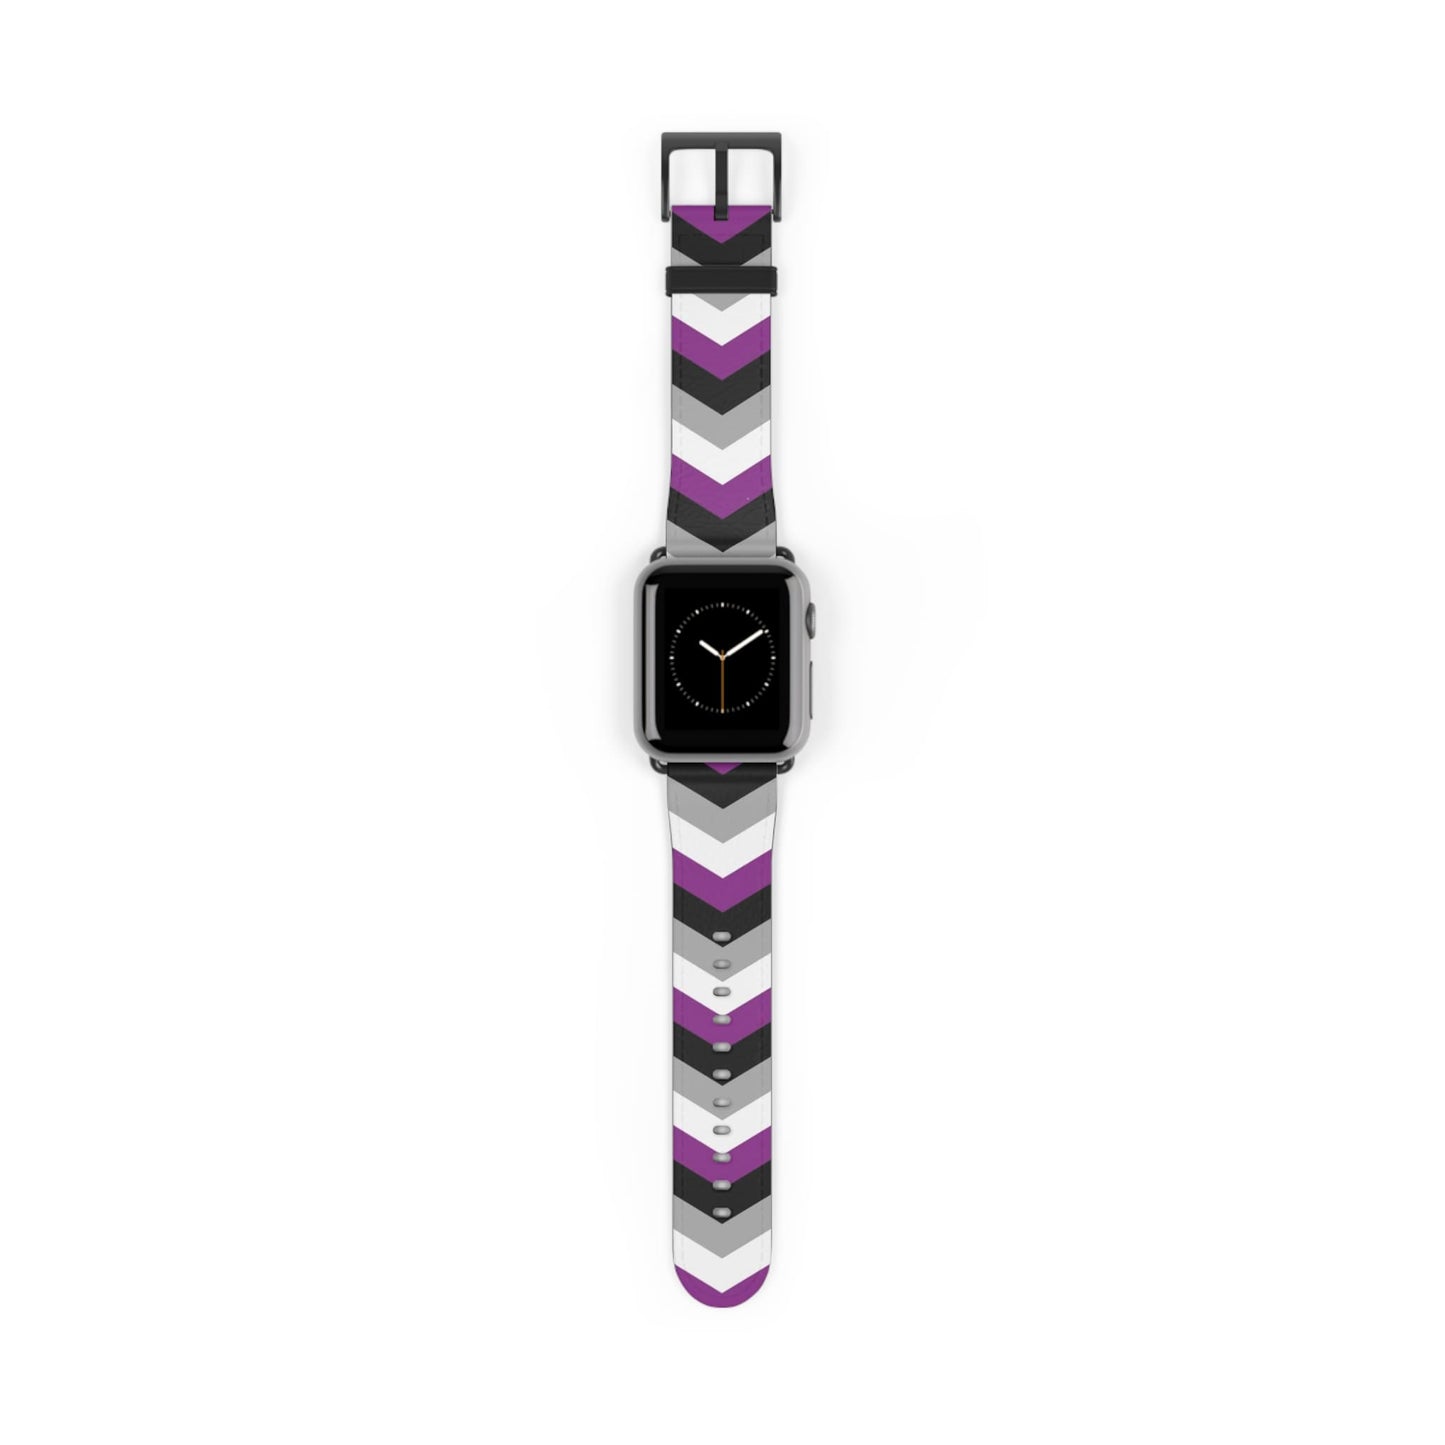 asexual apple watch band, discreet chevron pattern, black